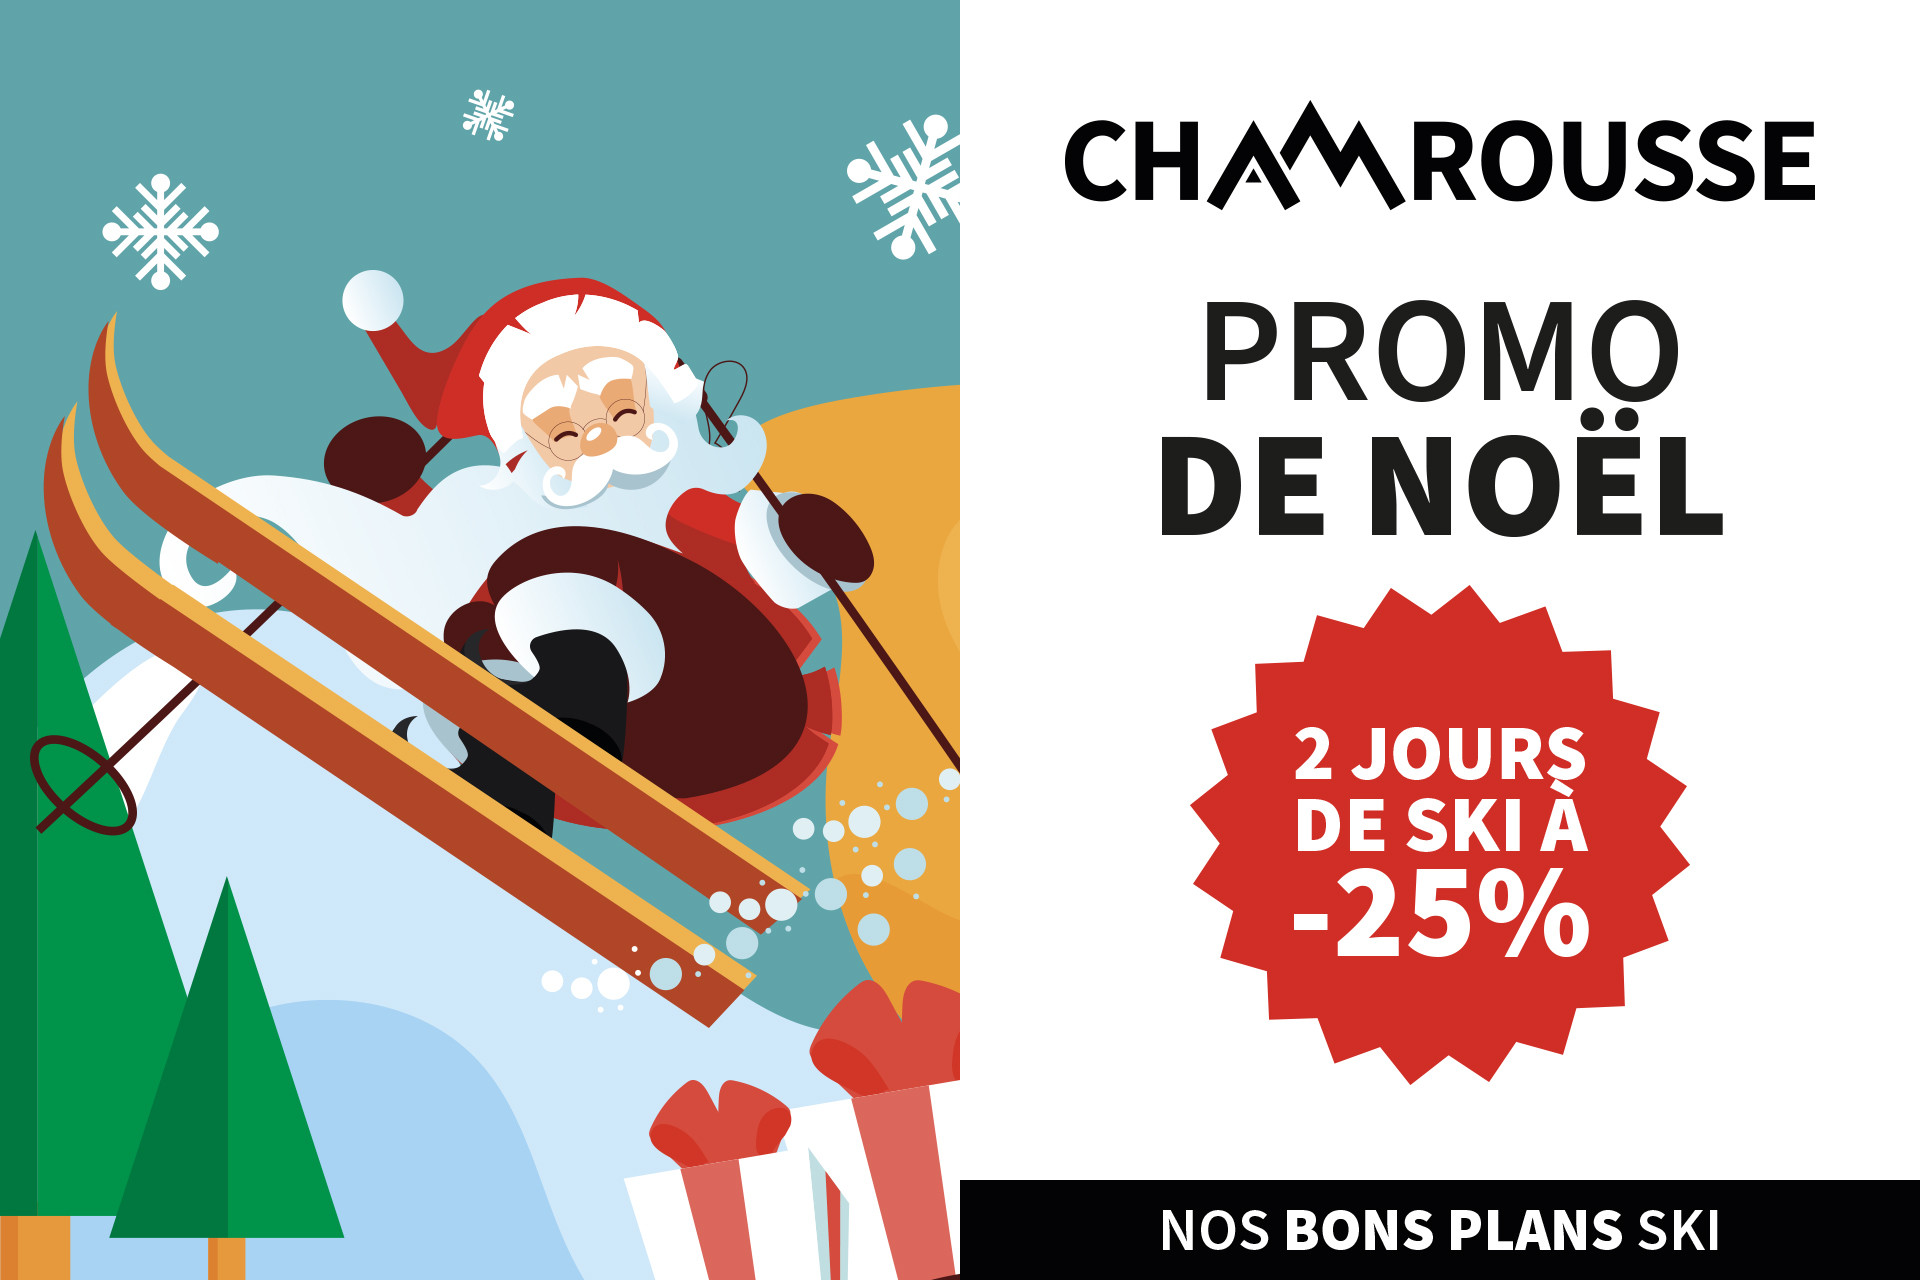 Chamrousse promotion noel achat en ligne forfait ski station montagne grenoble isère lyon rhône alpes france